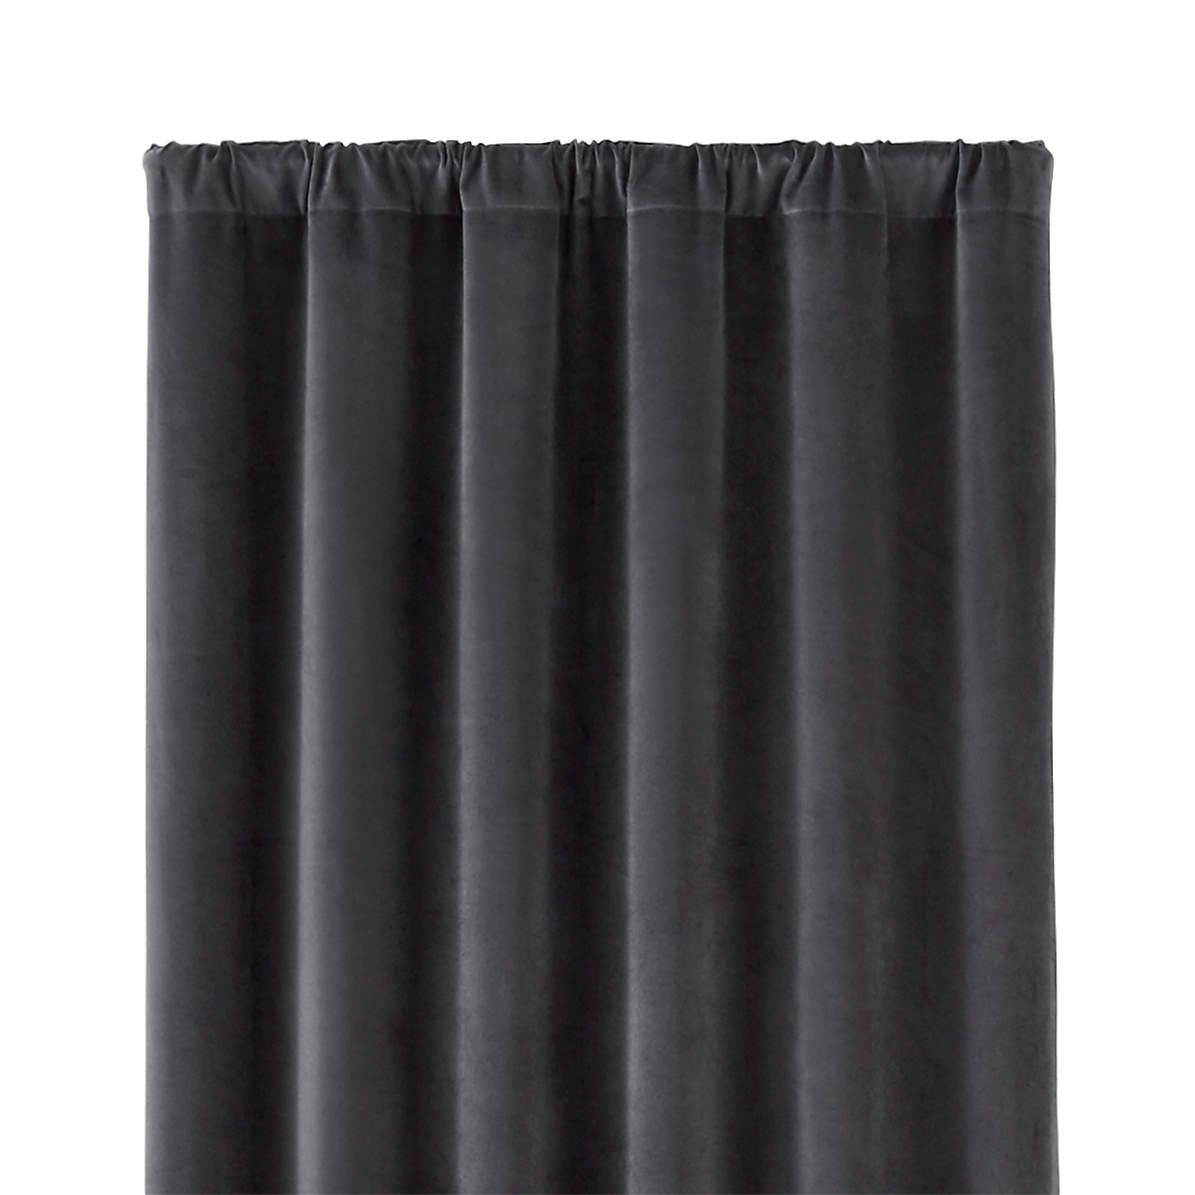 Windsor Dark Grey 48 X96 Curtain Panel, Black Faux Leather Curtain Panels